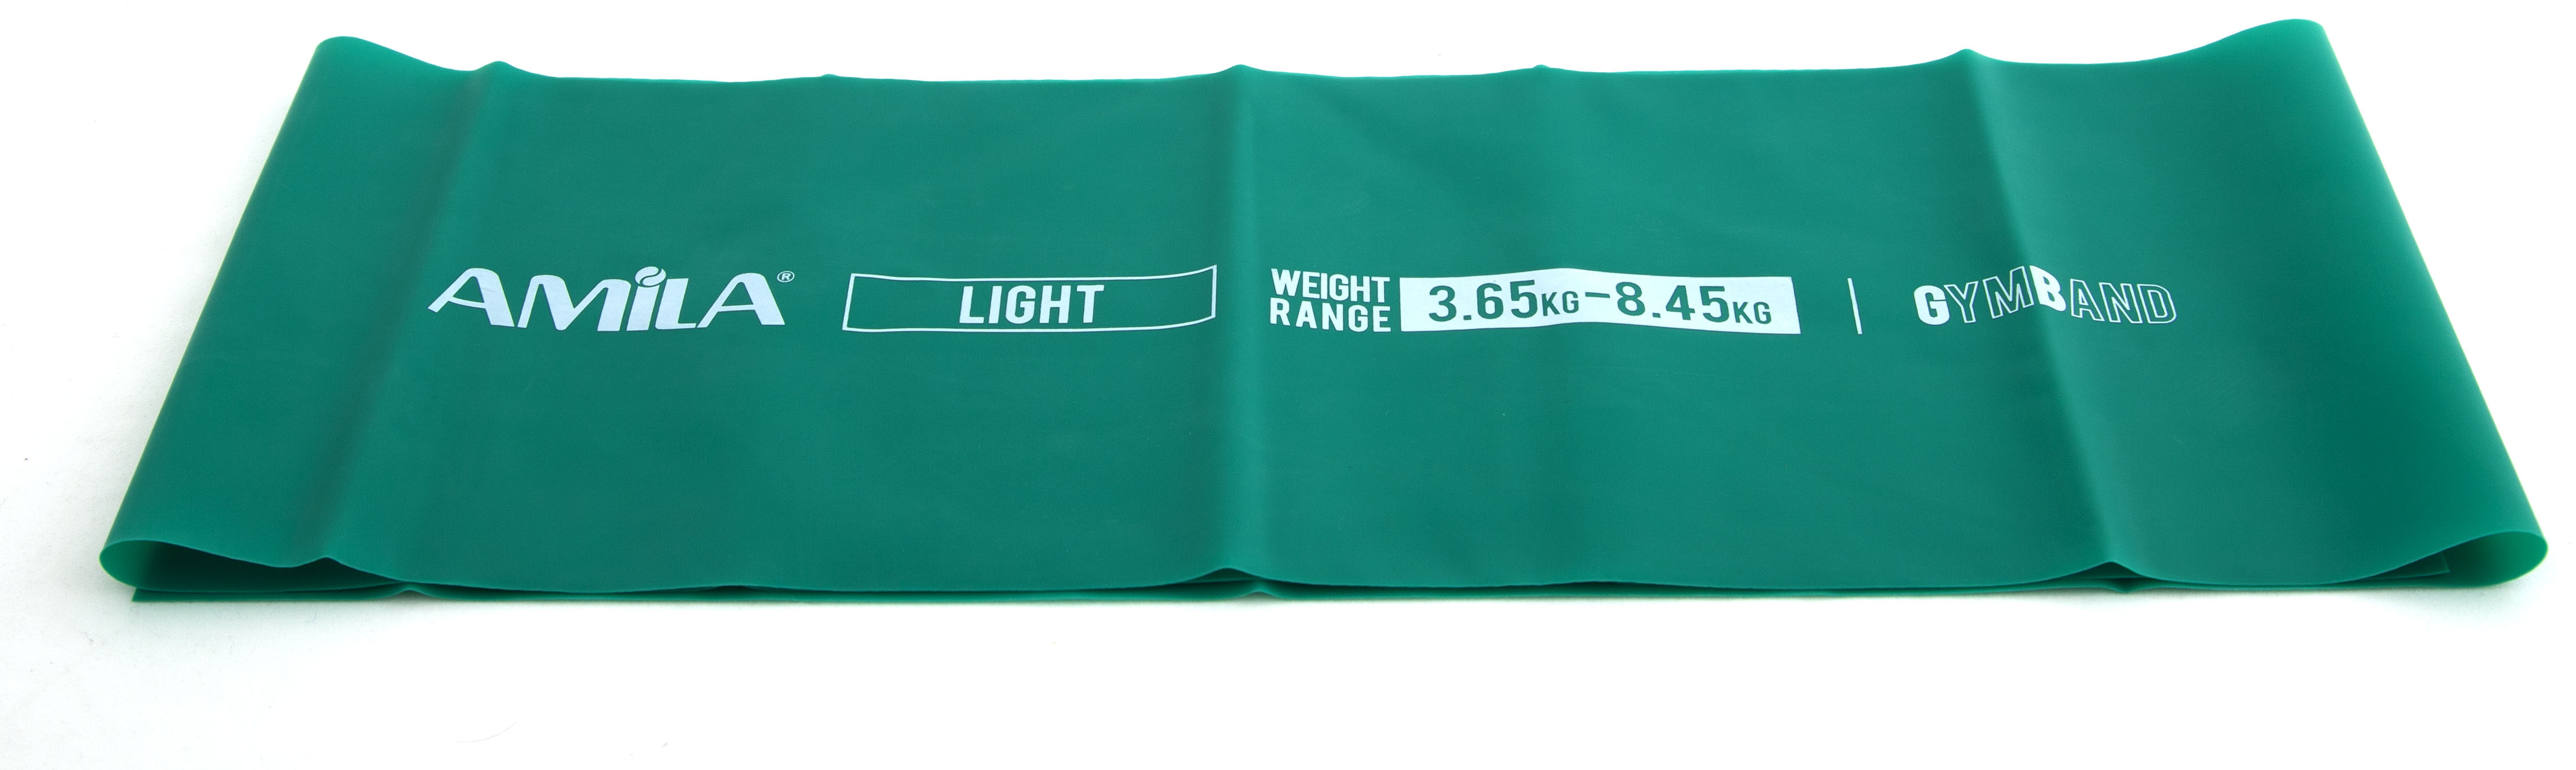 Amila Λαστιχο Gymband 2.5M Light Πρασινο (48186) ΠΡΑΣΙΝΟ